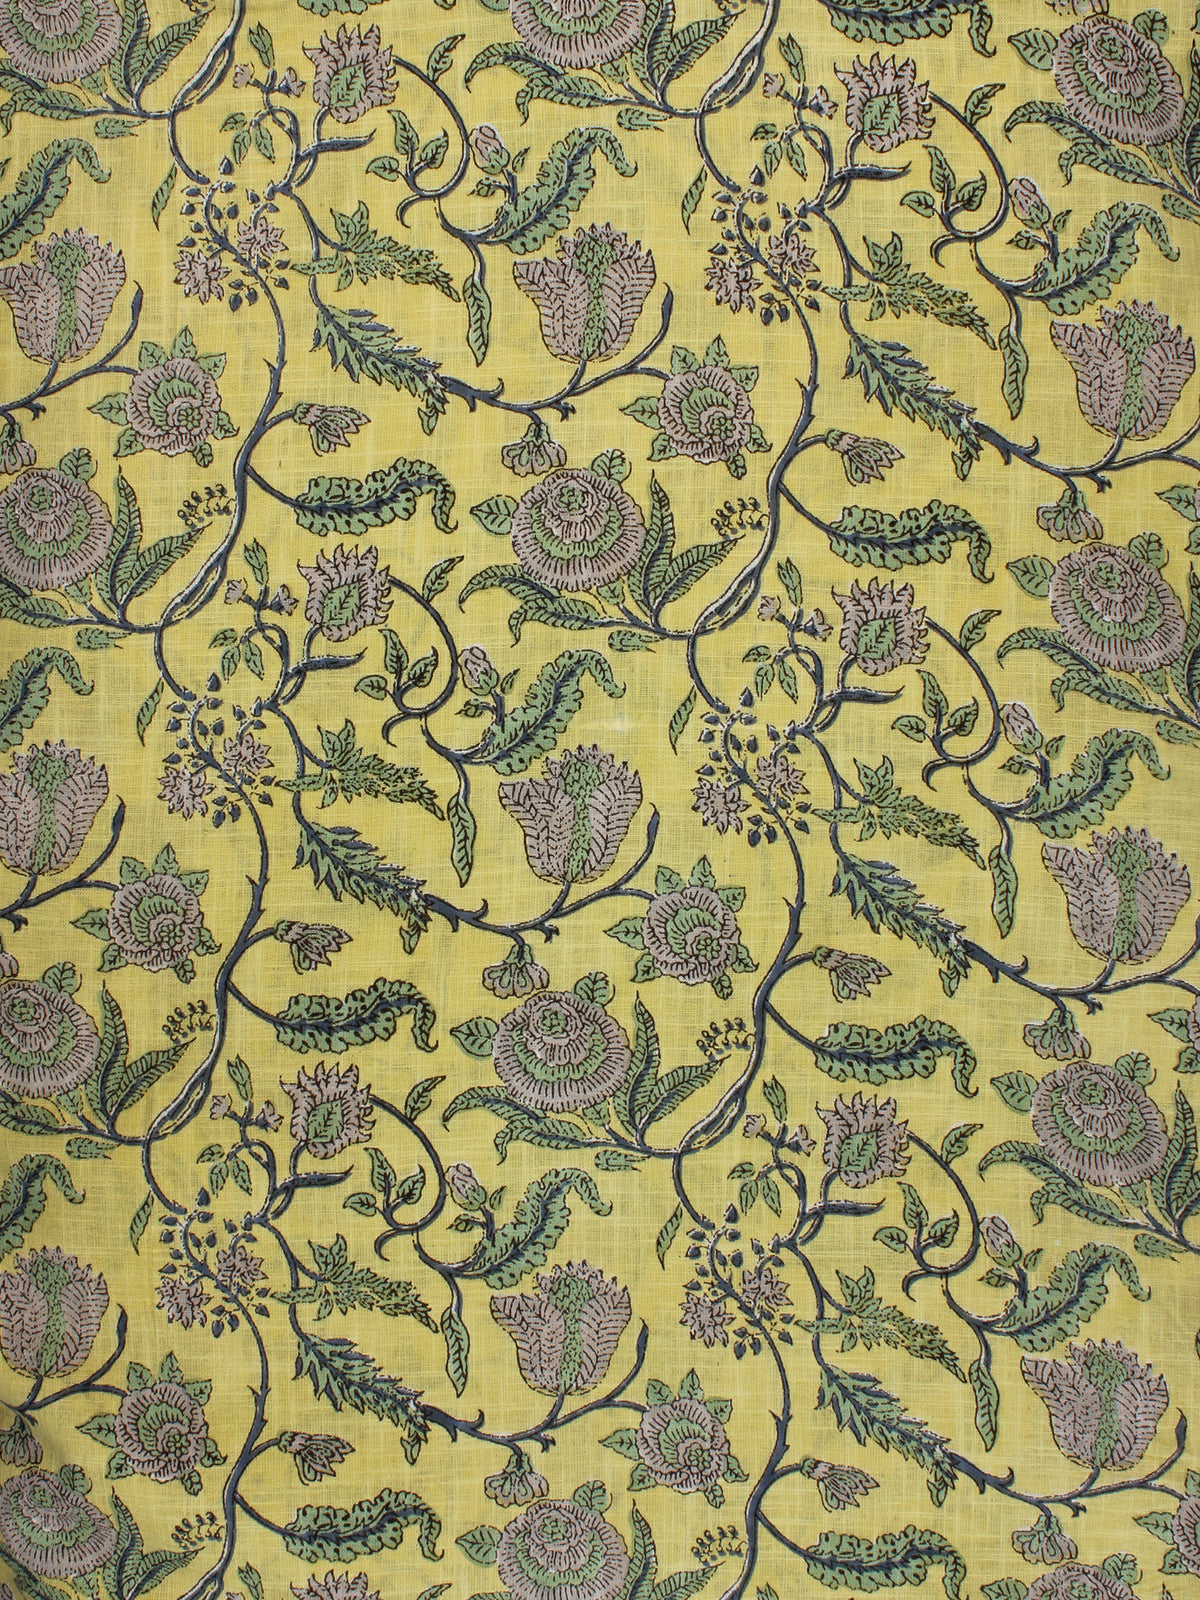 Yellow Green Grey Hand Block Printed Cotton Fabric Per Meter - F001F2286